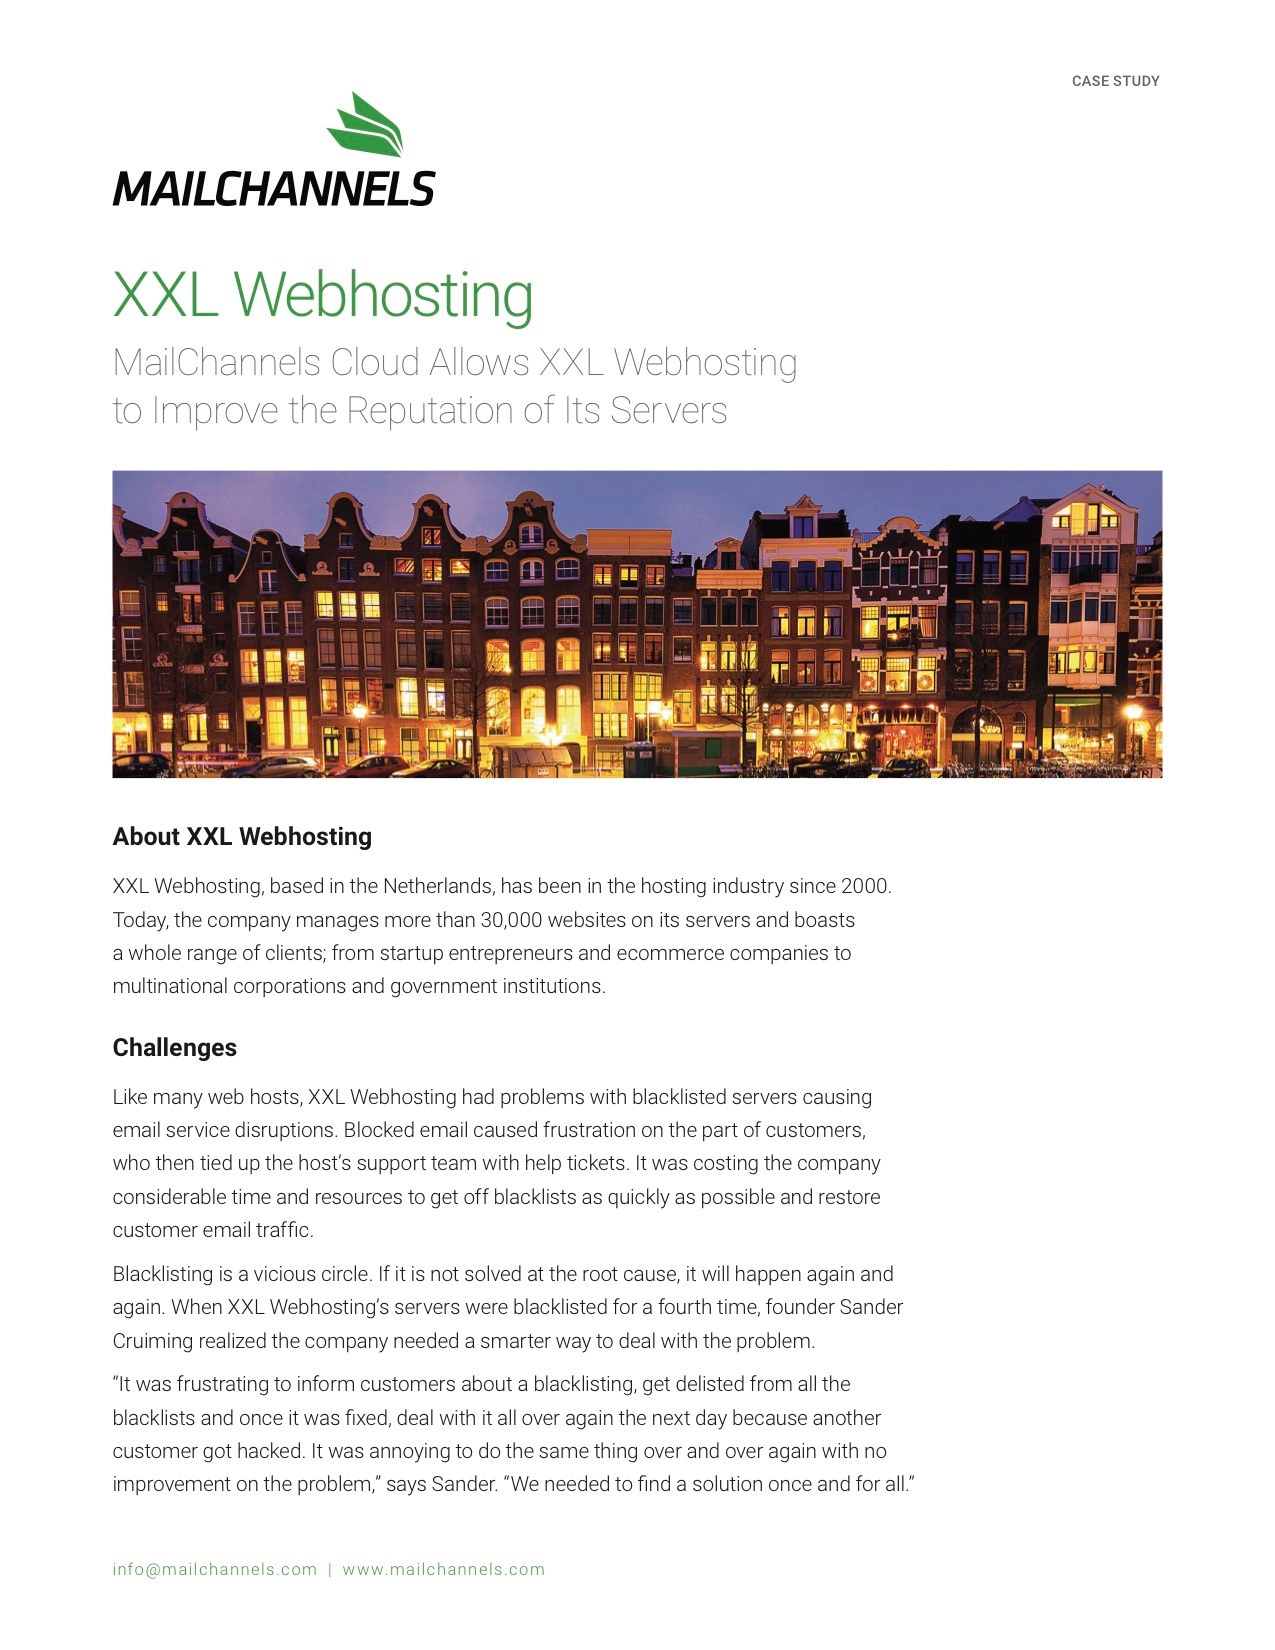 XXL_Webhosting_front_page.jpg